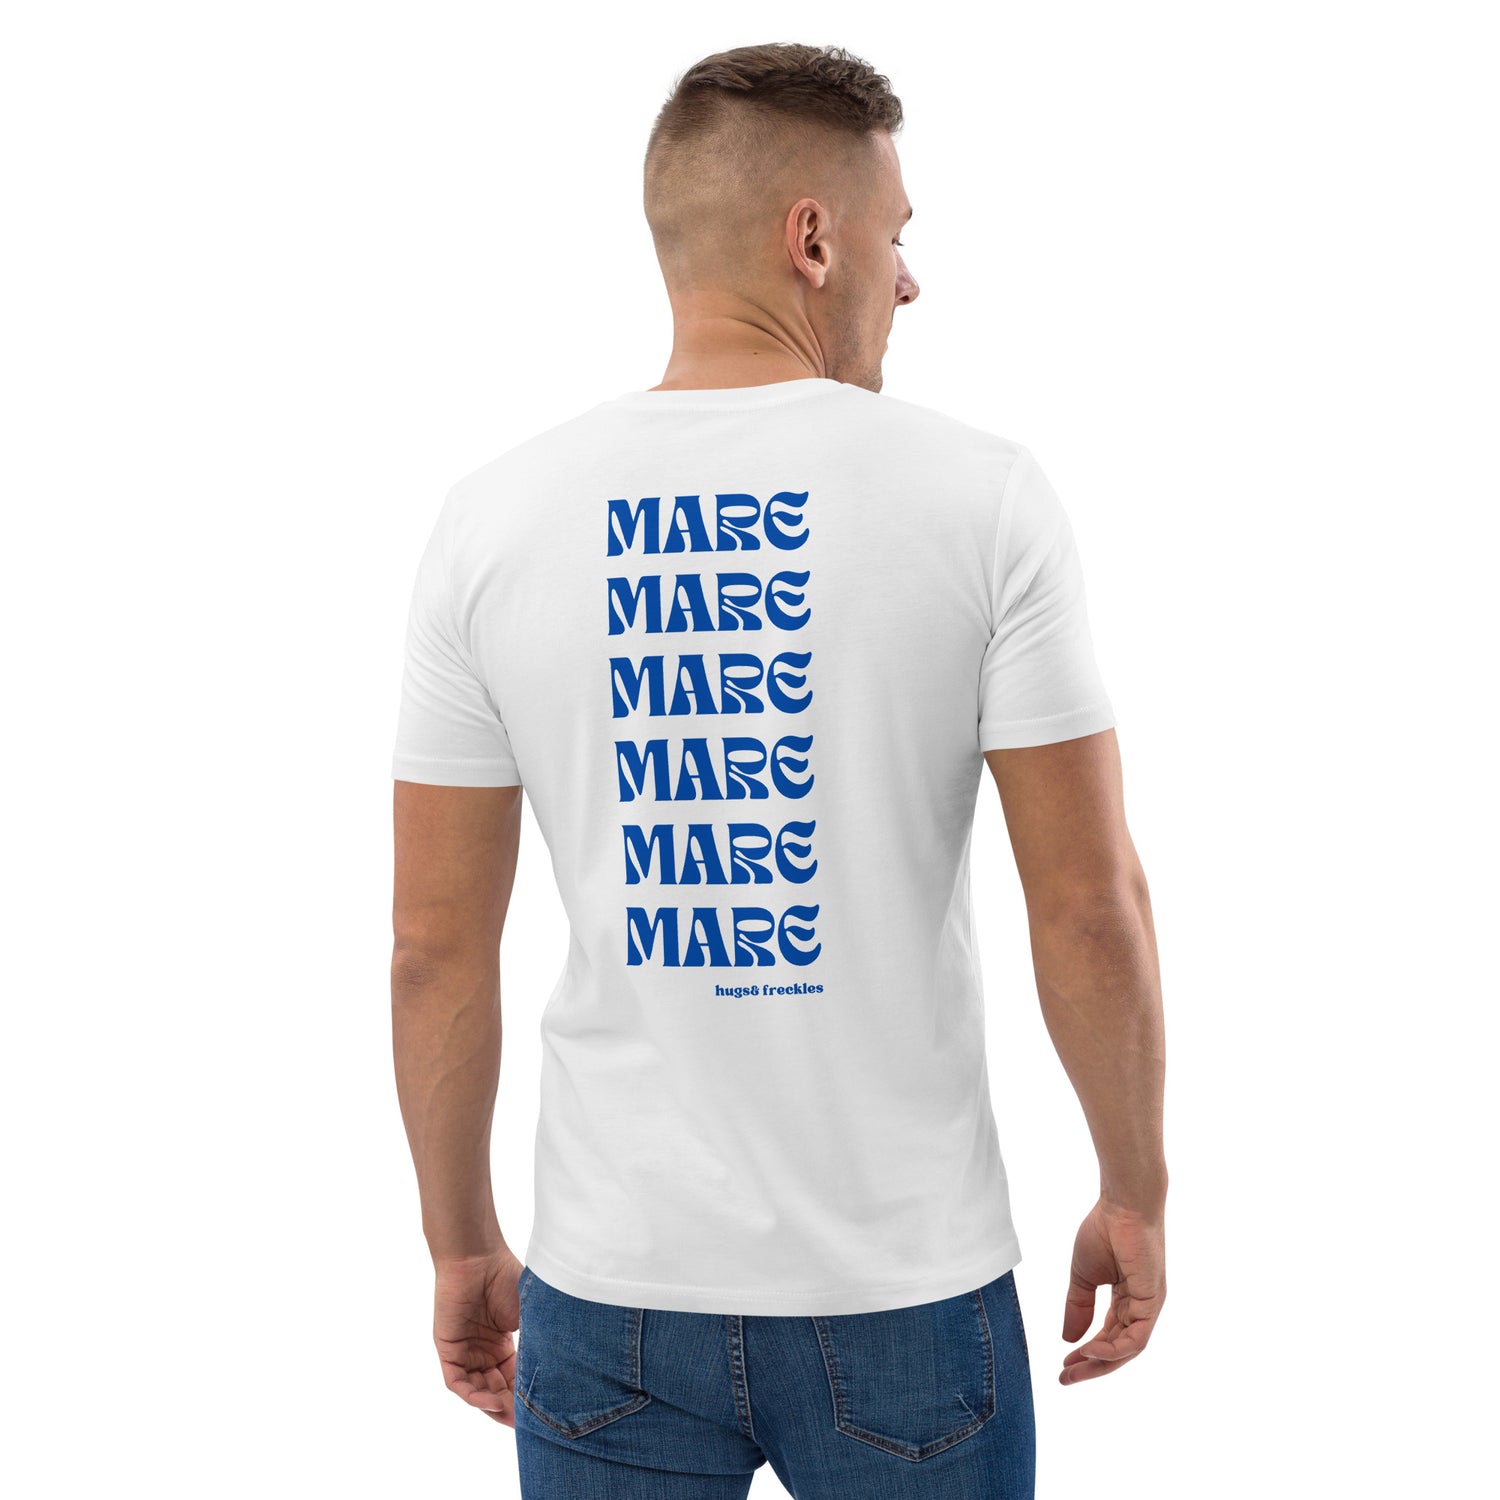 CLUB MARE - Unisex-Bio-Baumwoll-T-Shirt